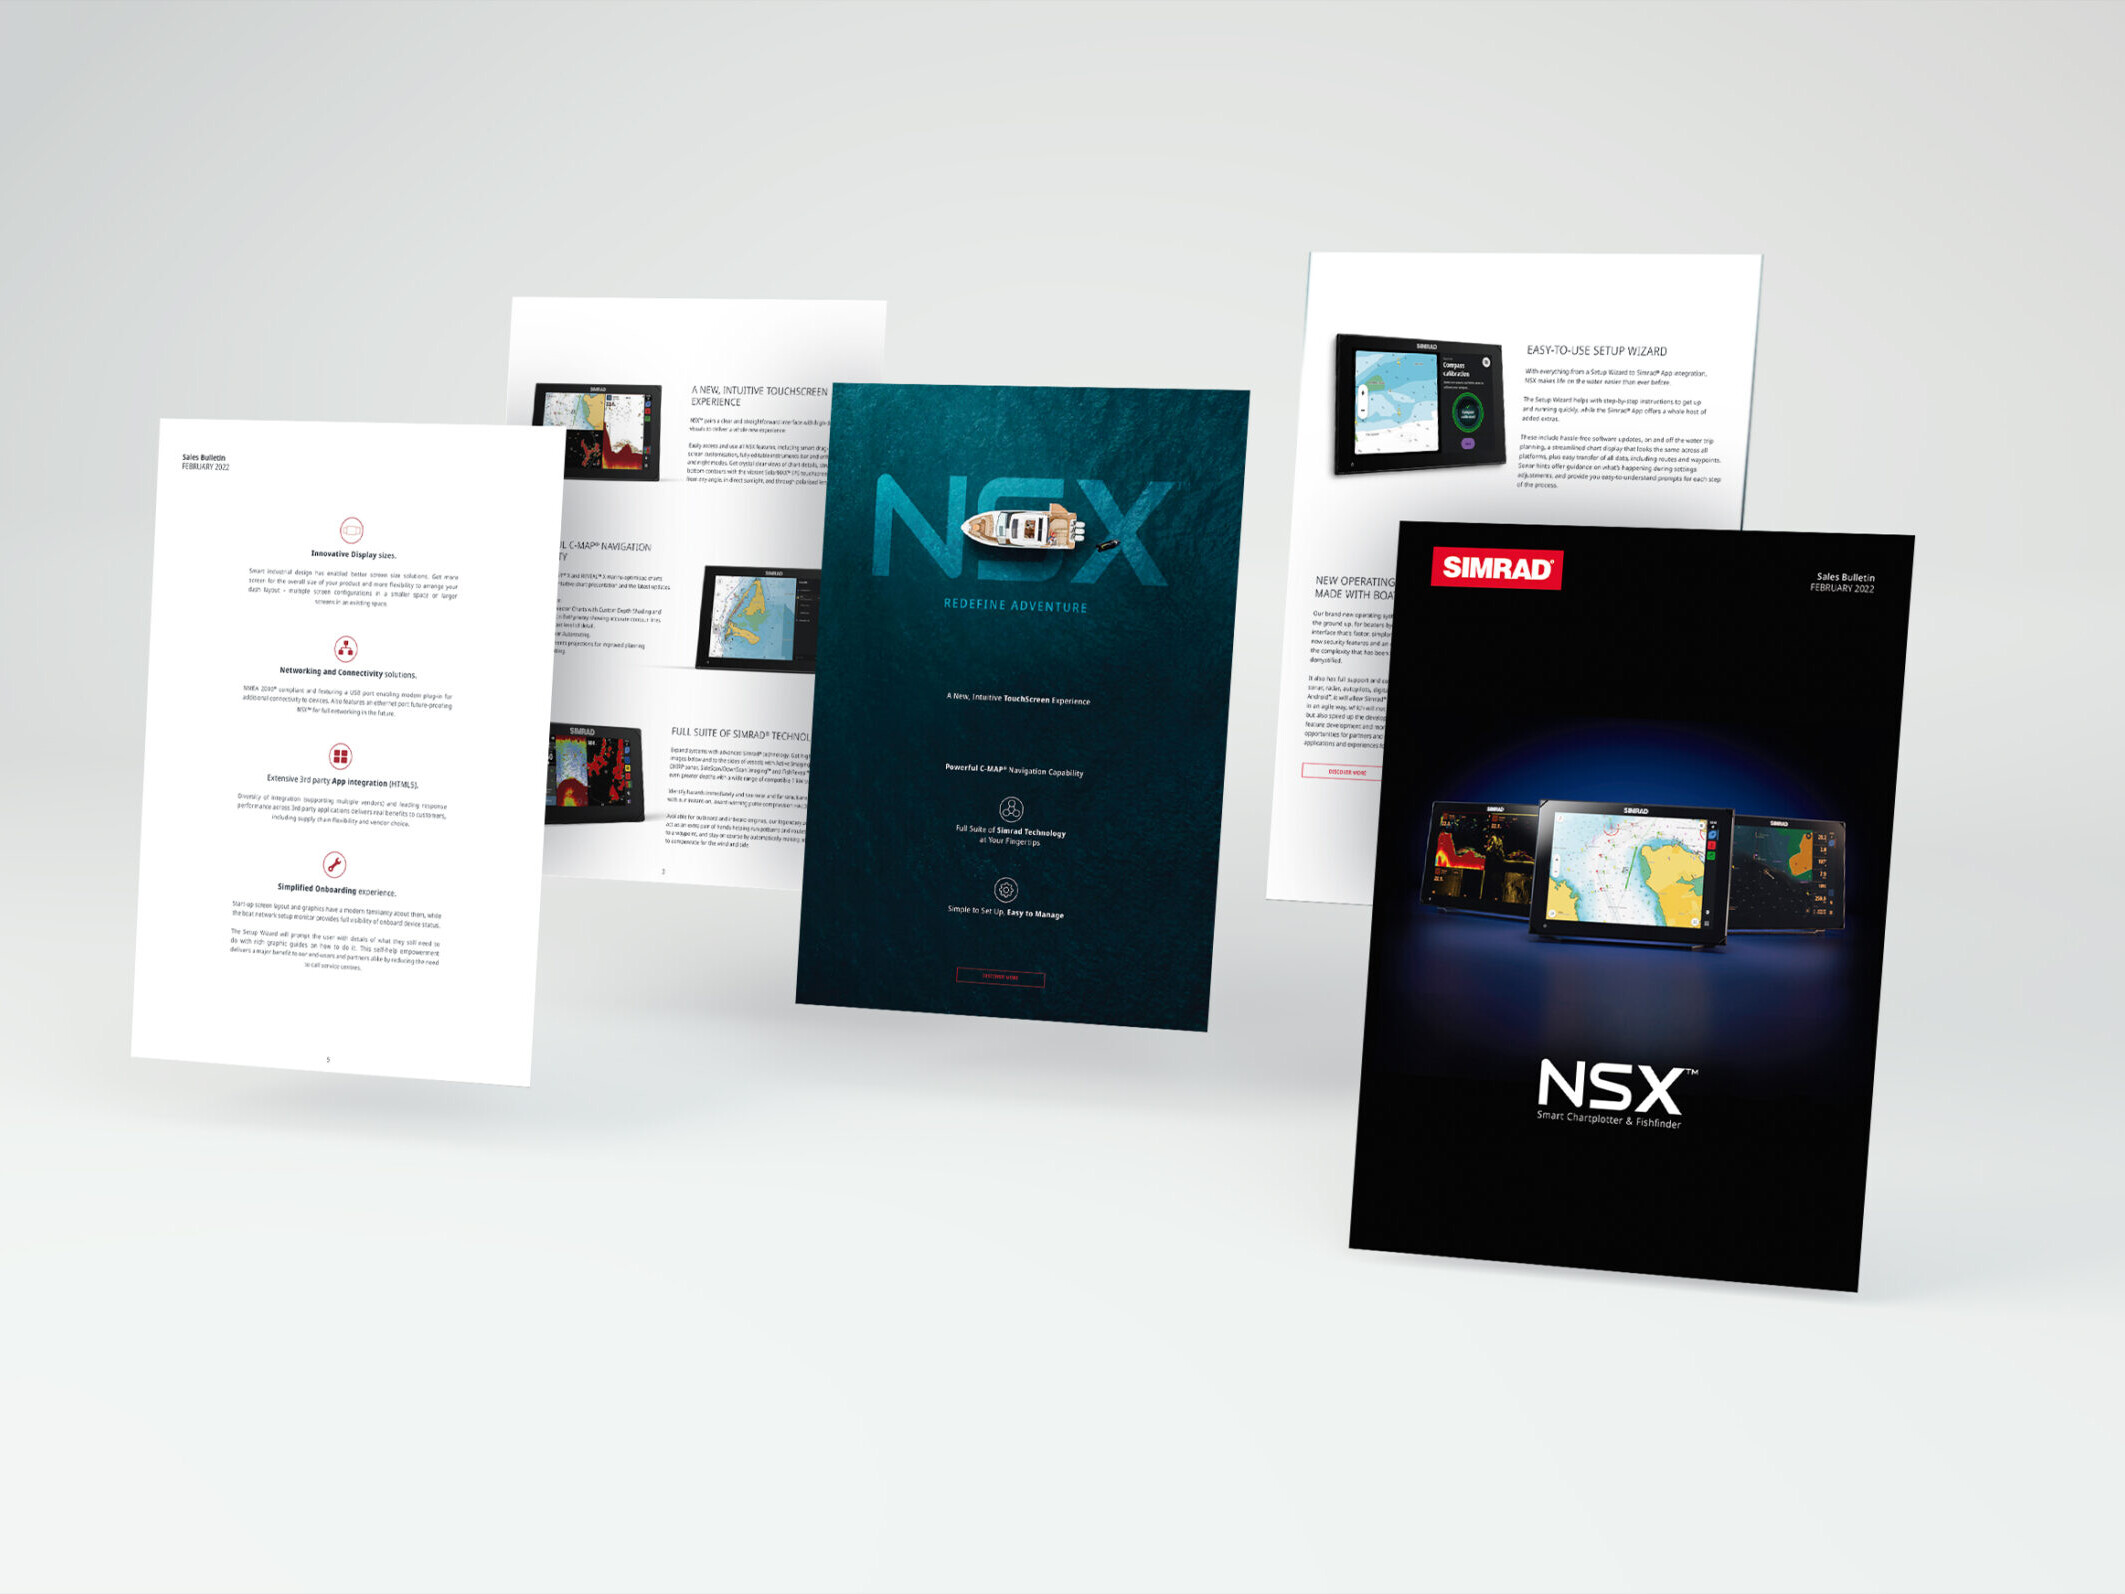 NSX by SIMRAD e-brochure